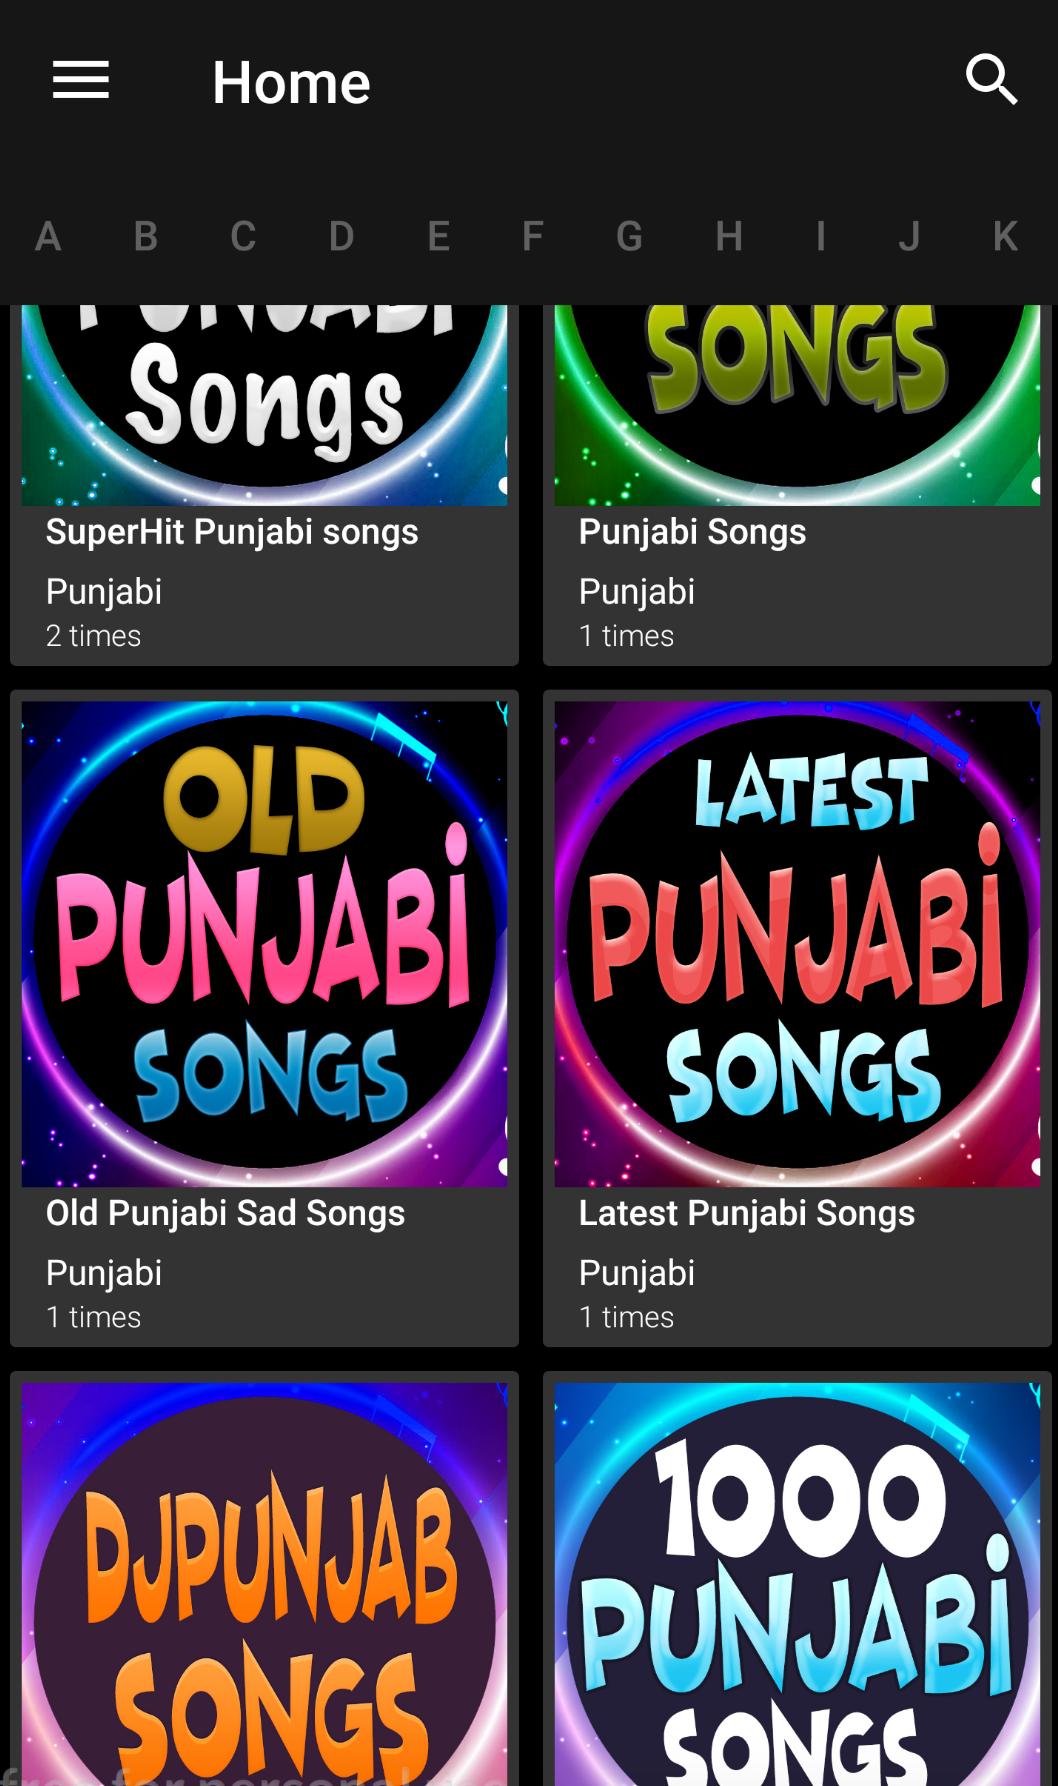 Laddi Gill All New Songs Albums DjPunjab